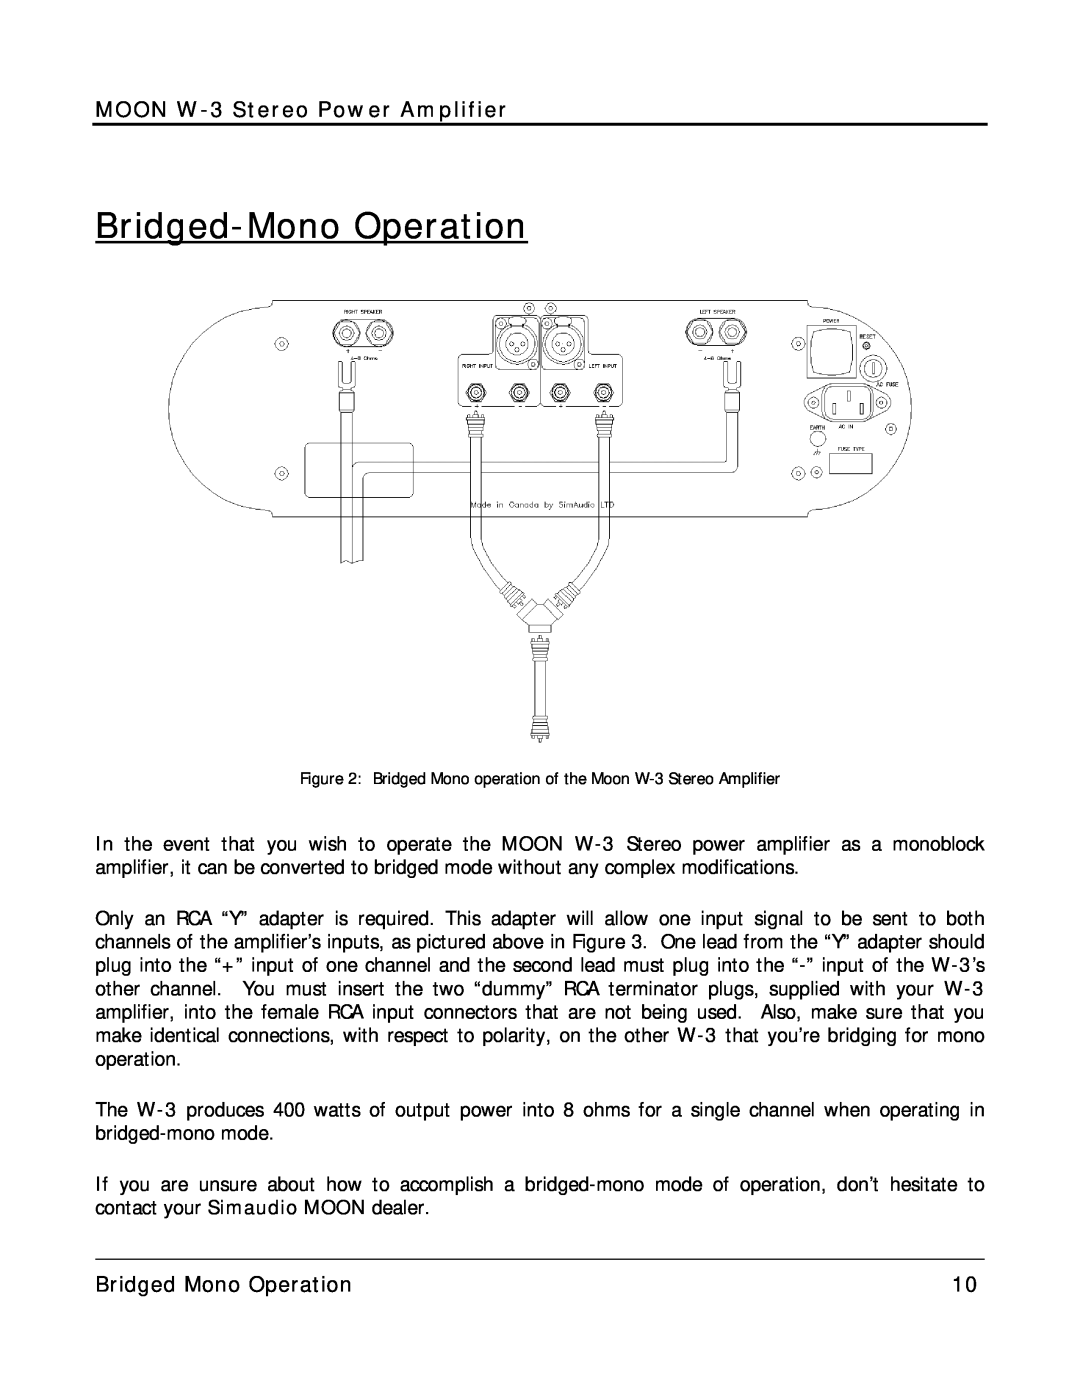 Simaudio owner manual Bridged-MonoOperation, Bridged Mono Operation, MOON W-3Stereo Power Amplifier 